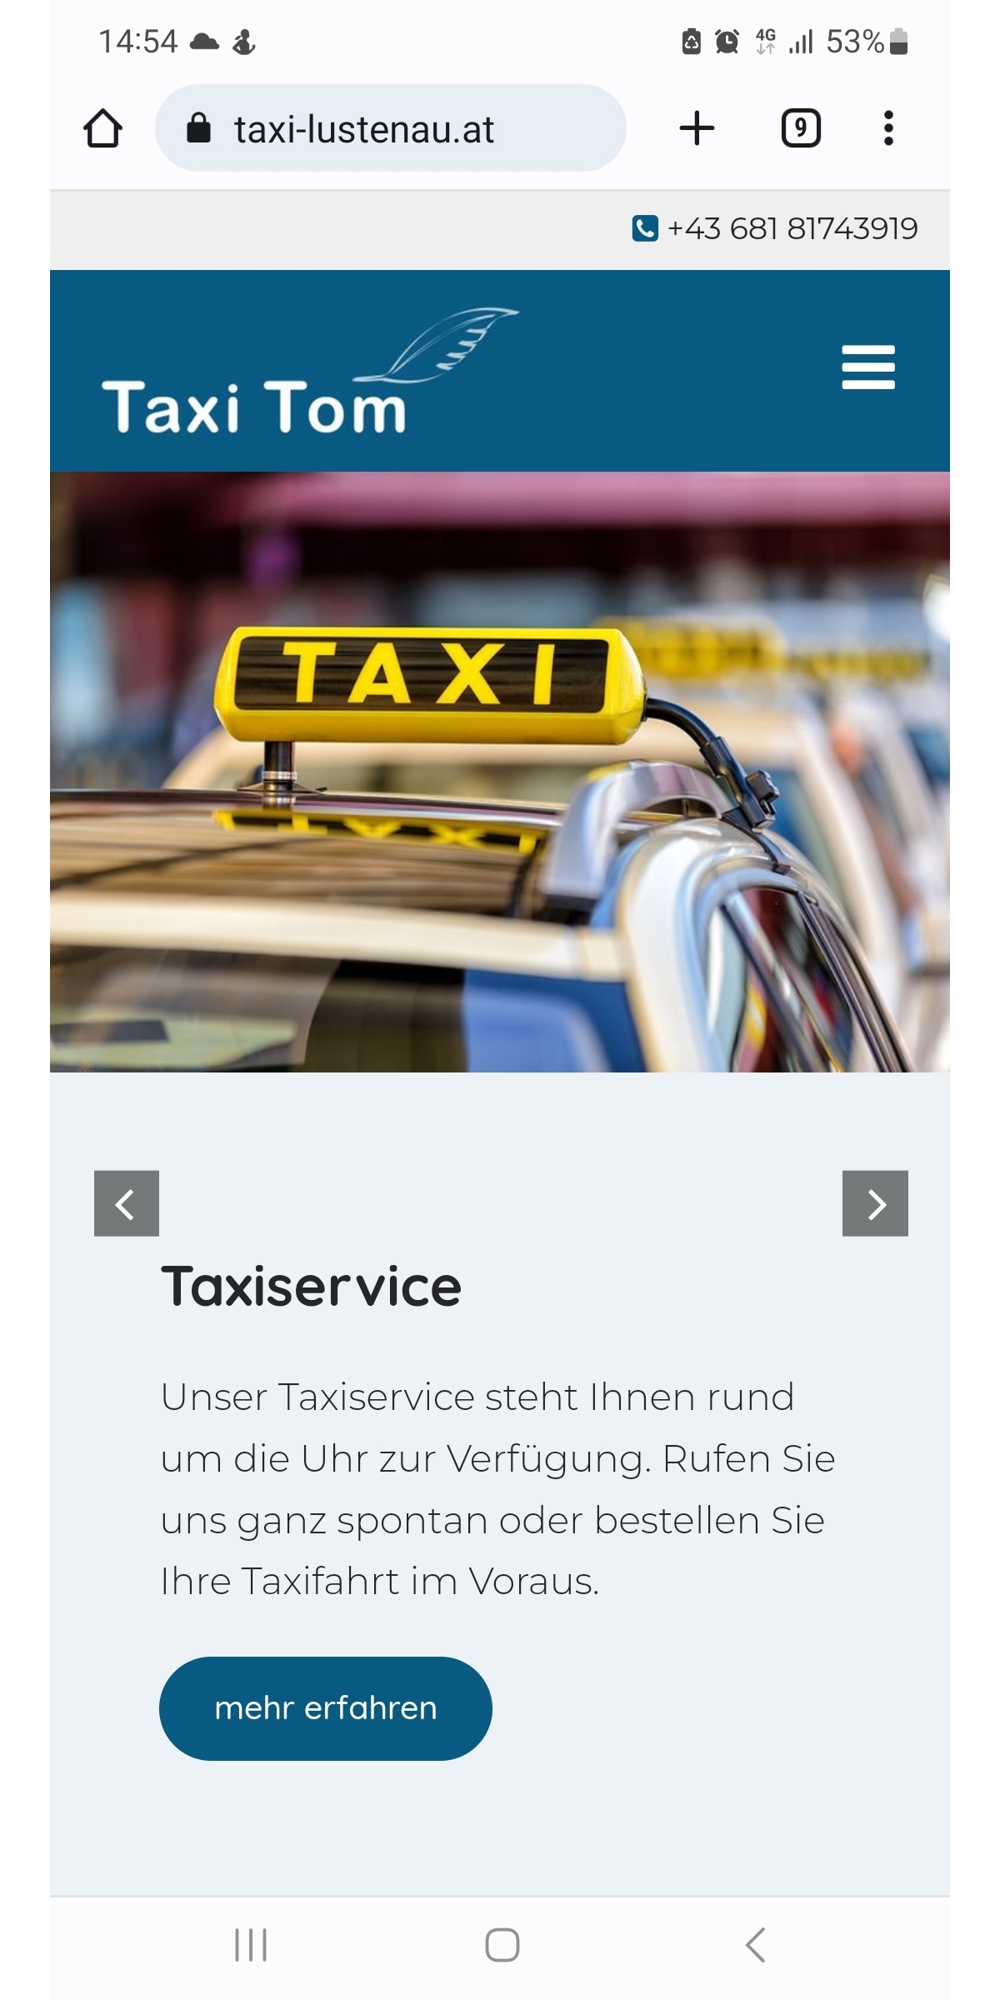 Taxi Fahrer/in gesucht